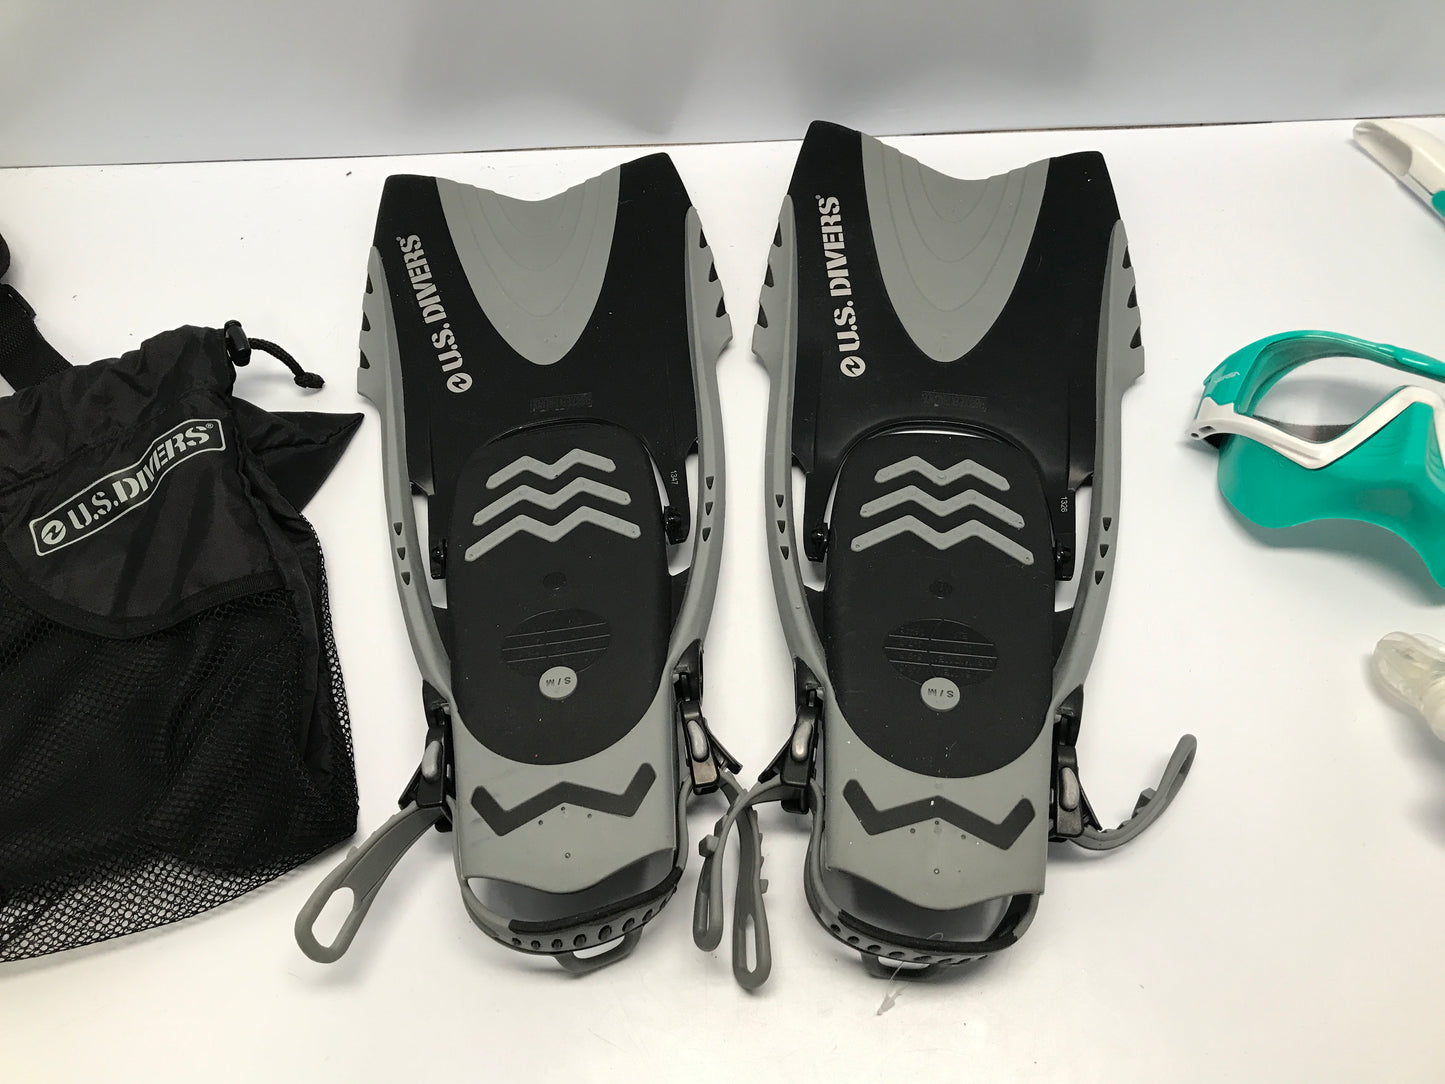 Snorkel Dive Fins Set Ladies Size 5-9.5 Black Grey Teal